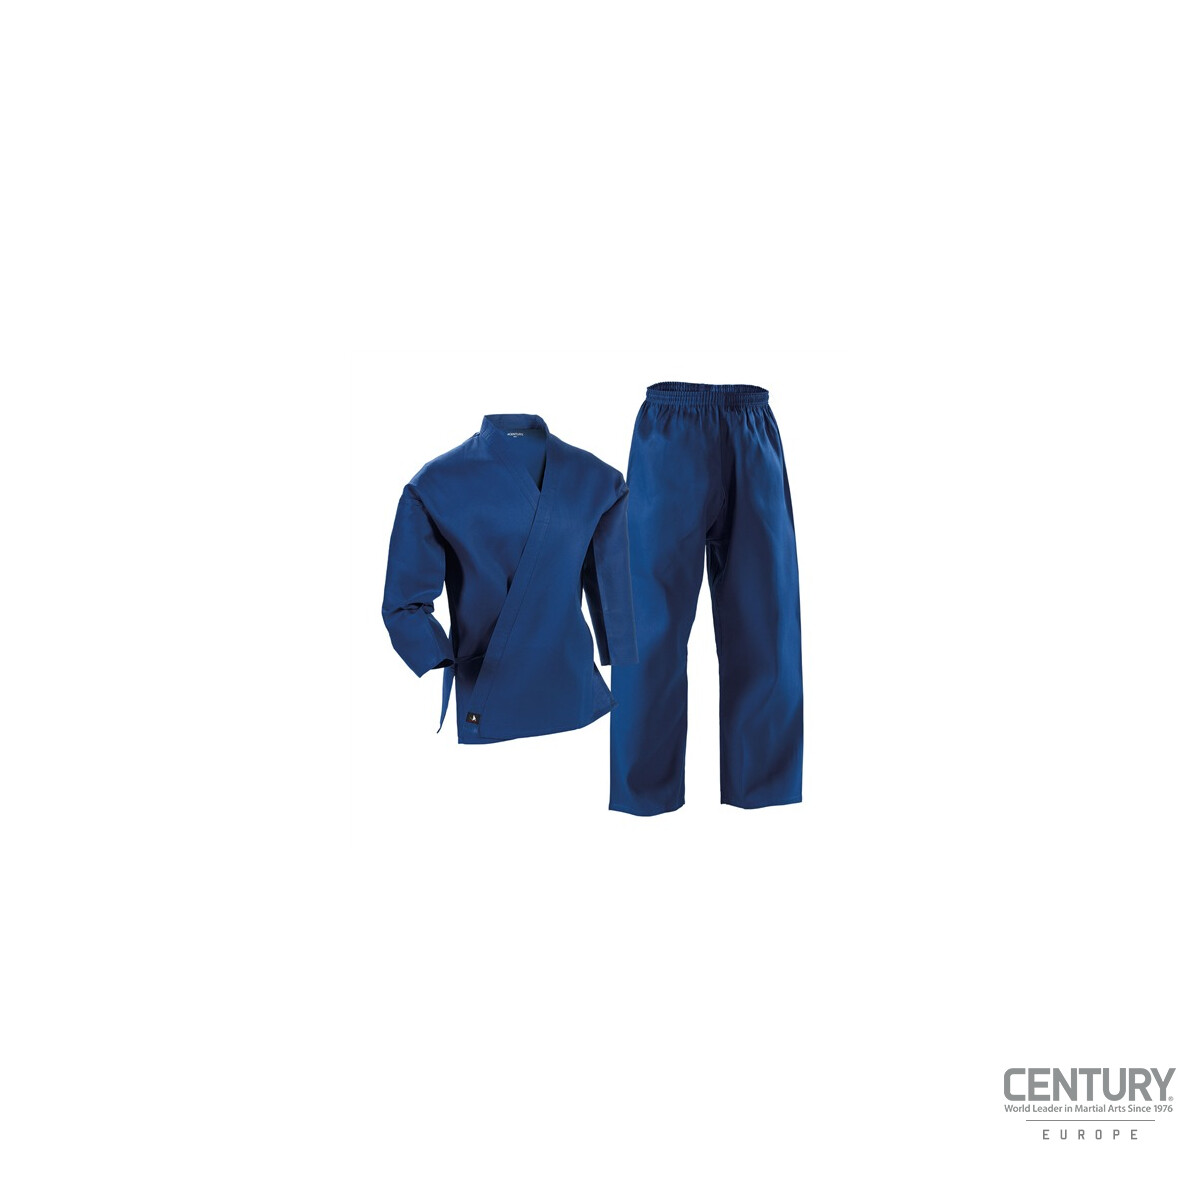 Lightweight Student Uniform 6 oz Blue [2] 142 - 155 cm